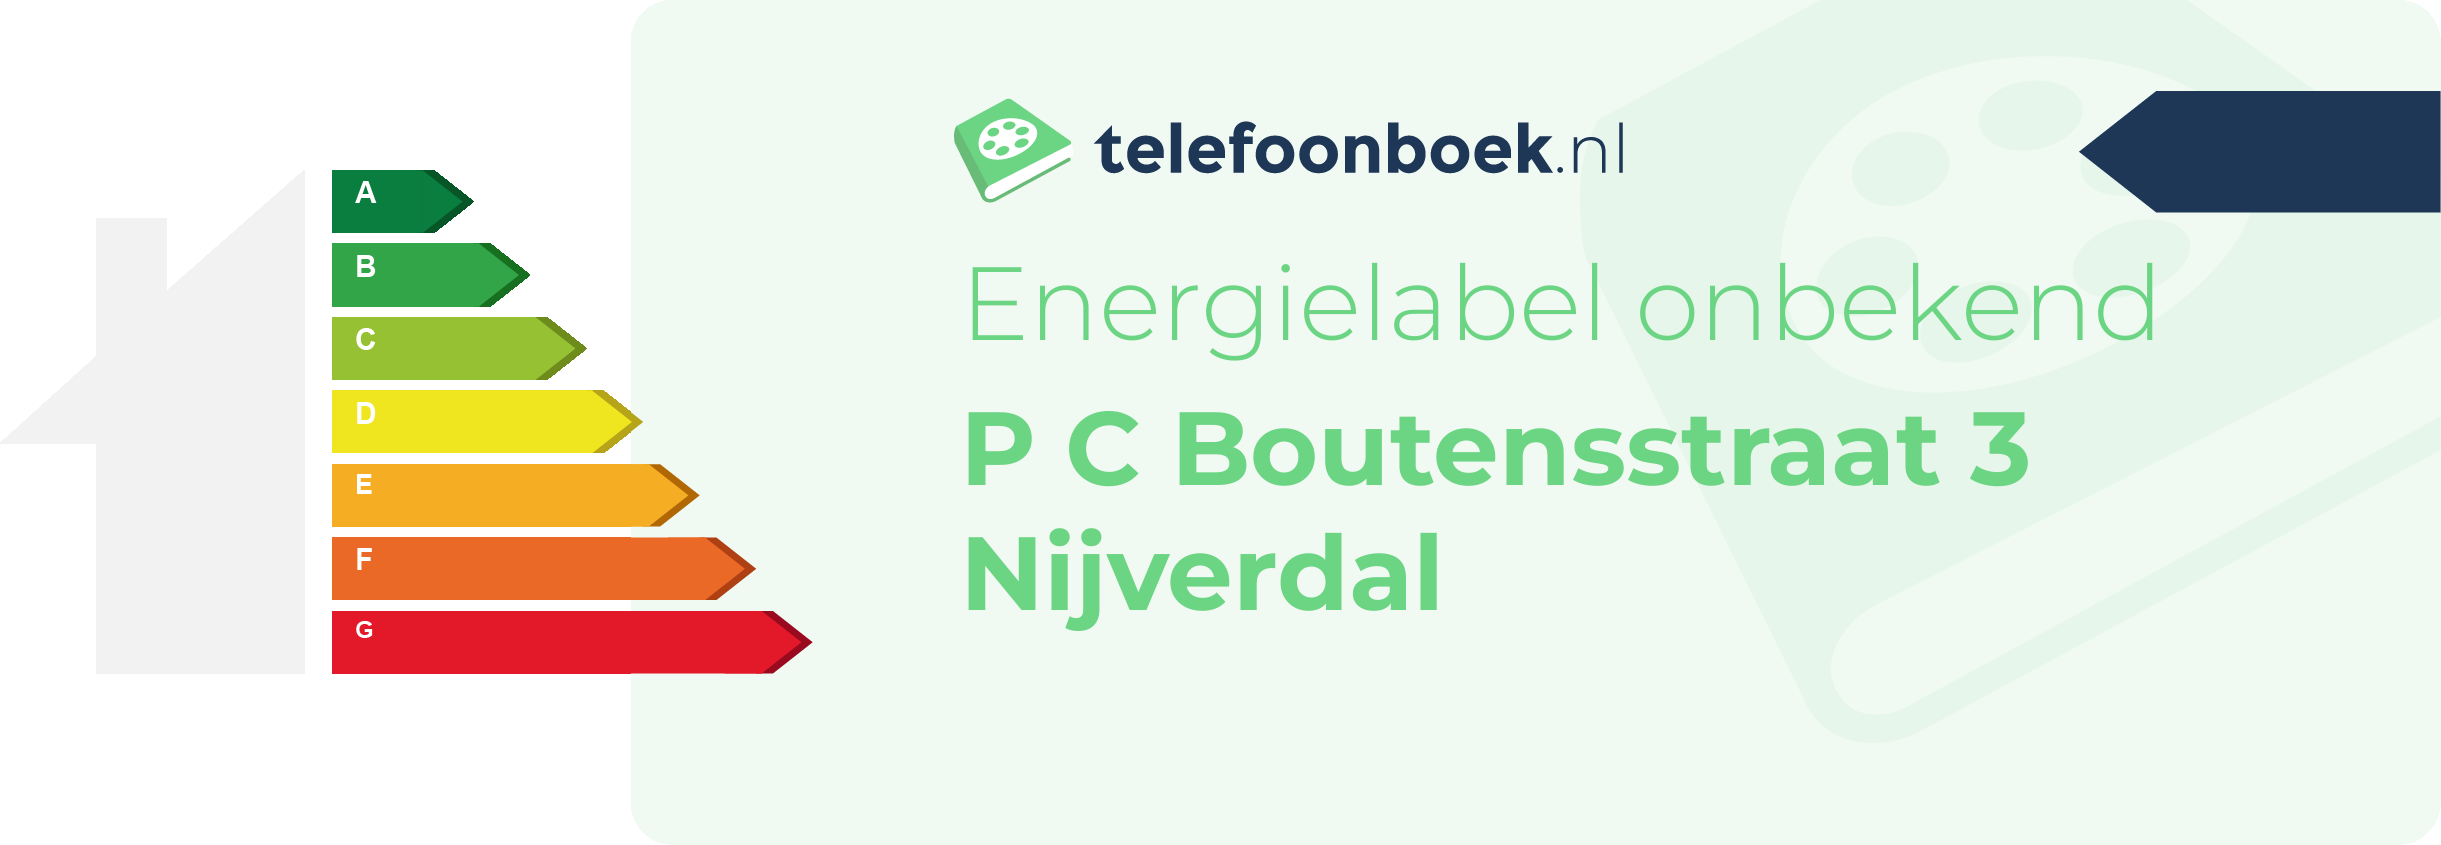 Energielabel P C Boutensstraat 3 Nijverdal